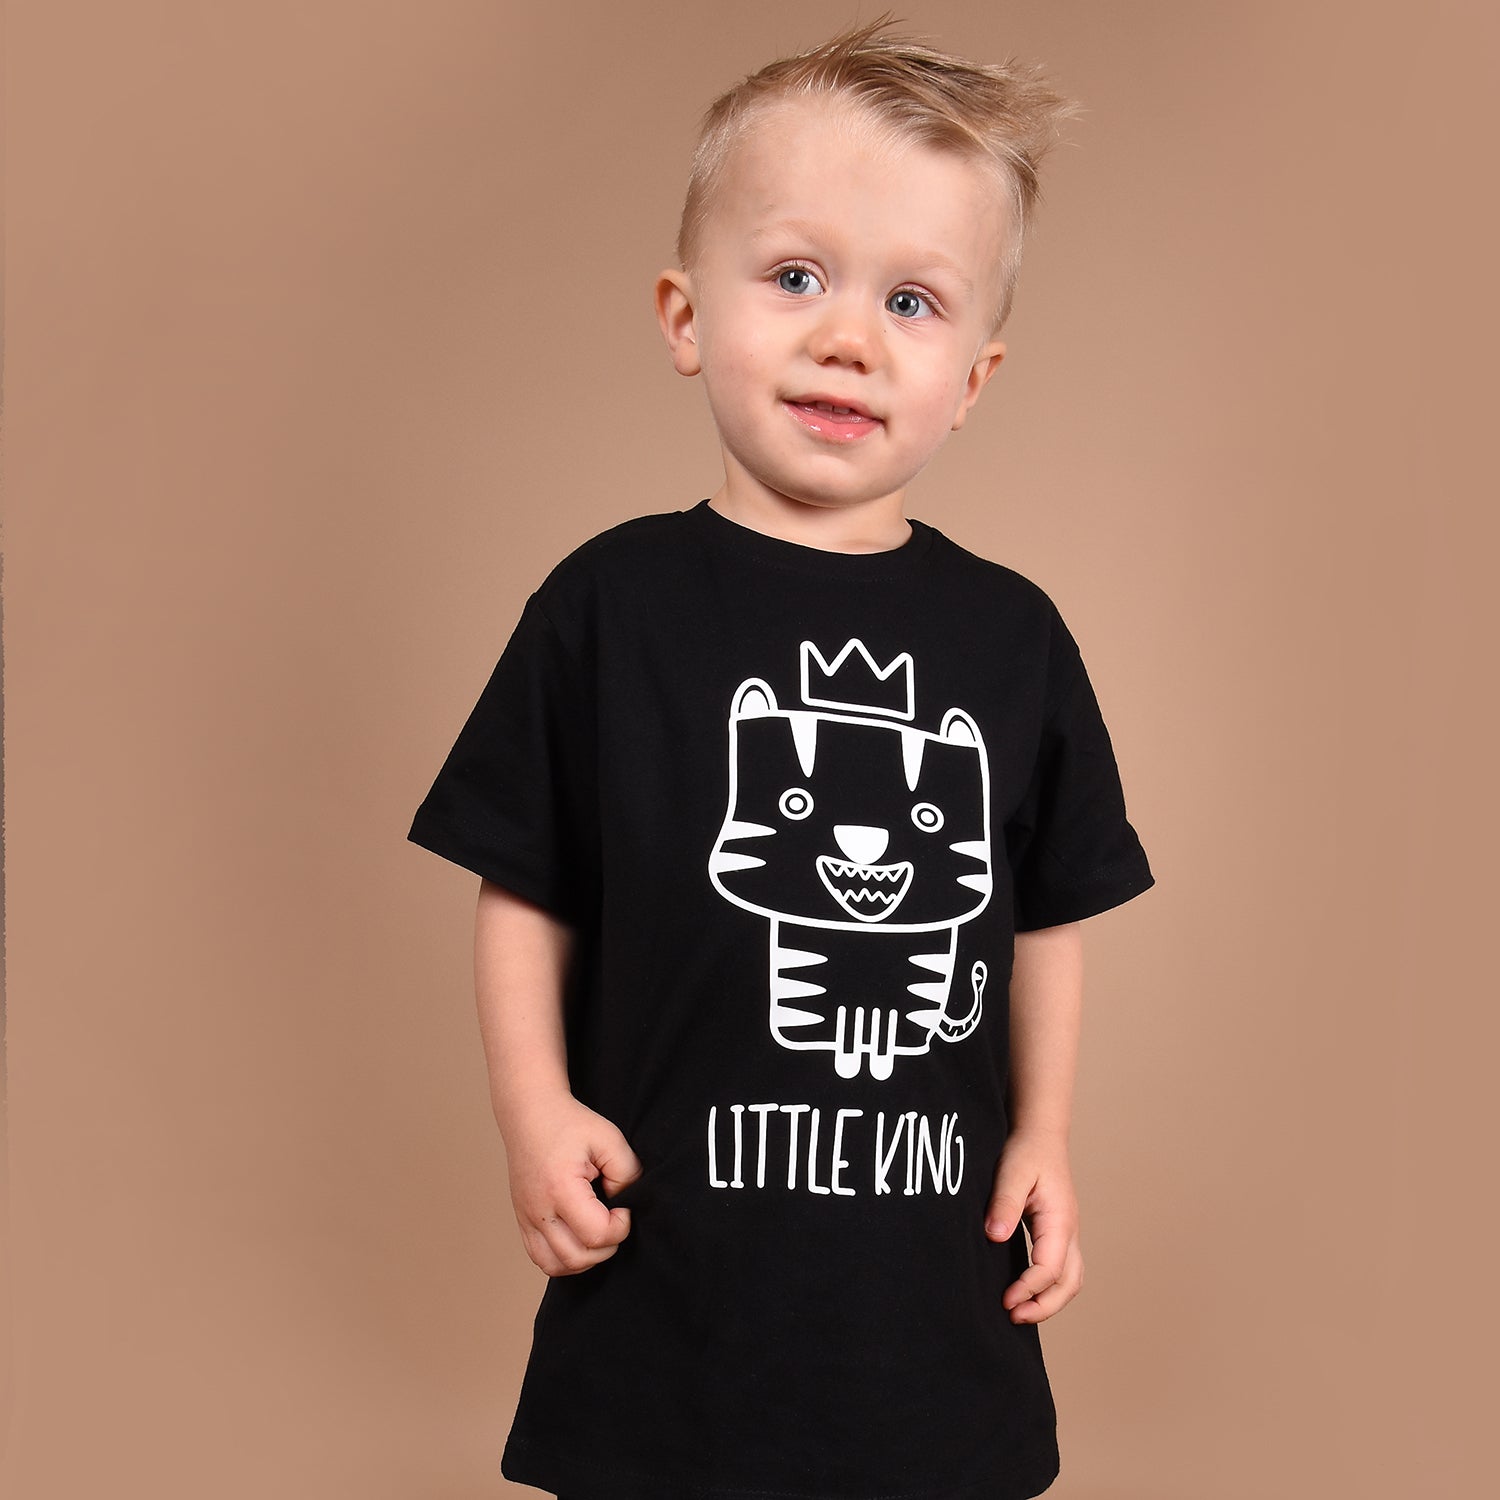 'Little king' kids shortsleeve shirt